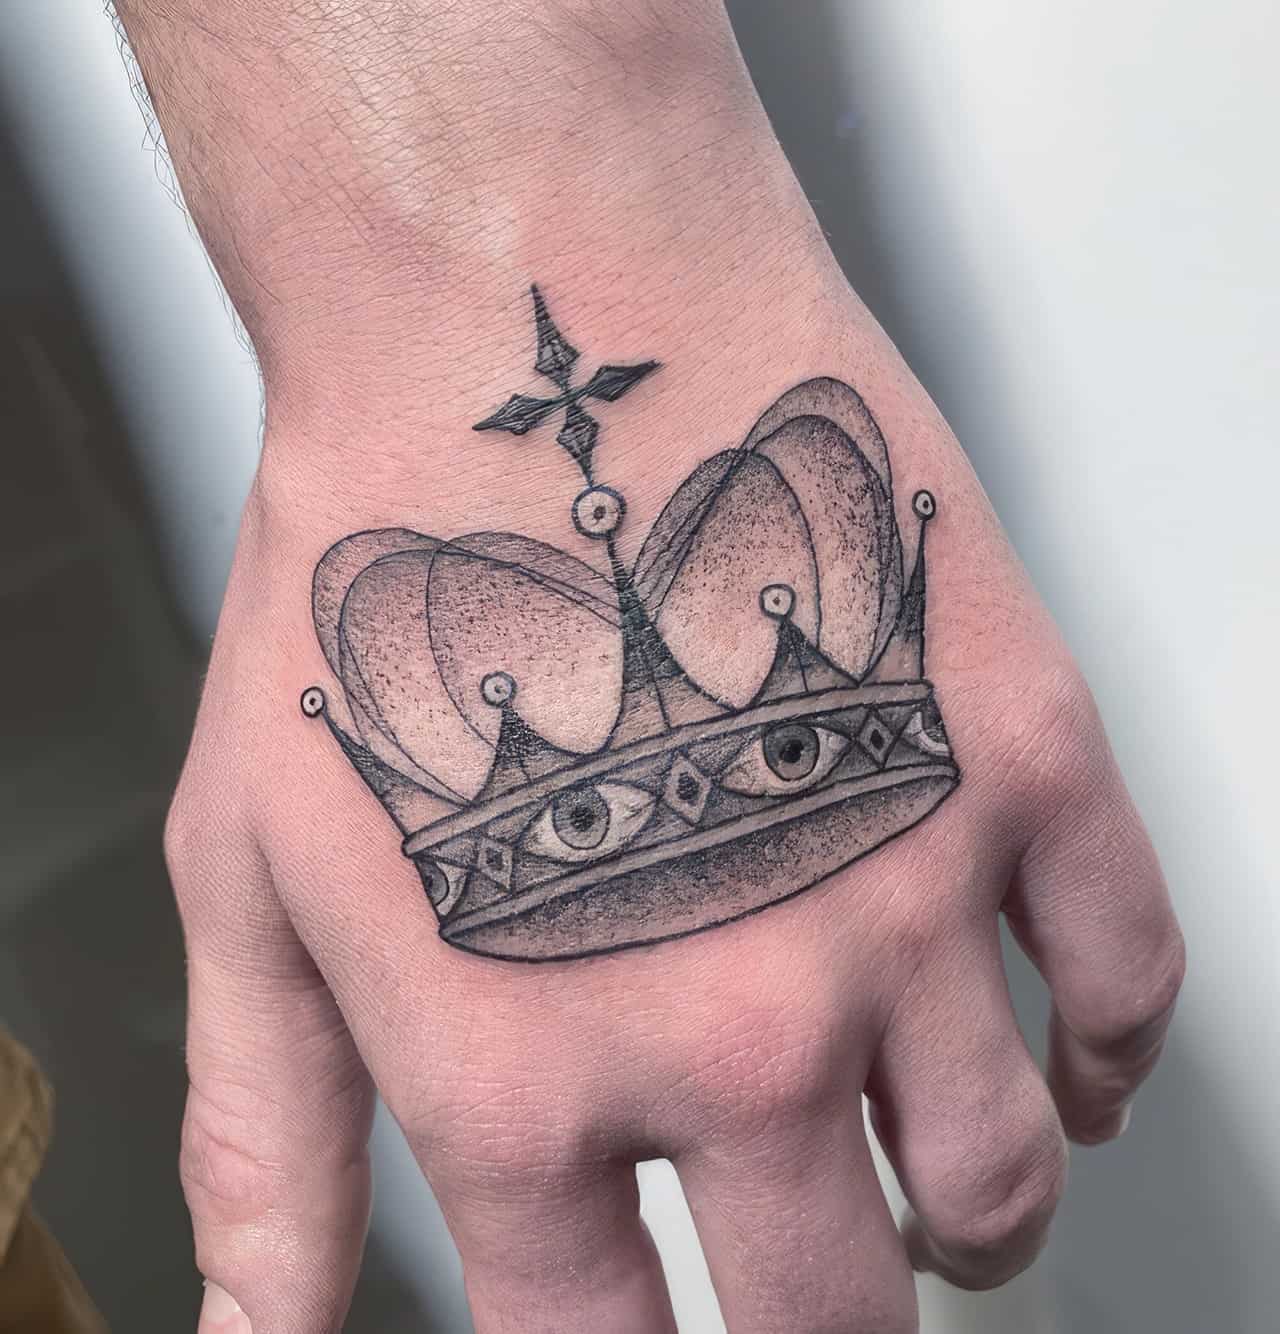 Women are getting crown tattoos to celebrate self-love | Metro News